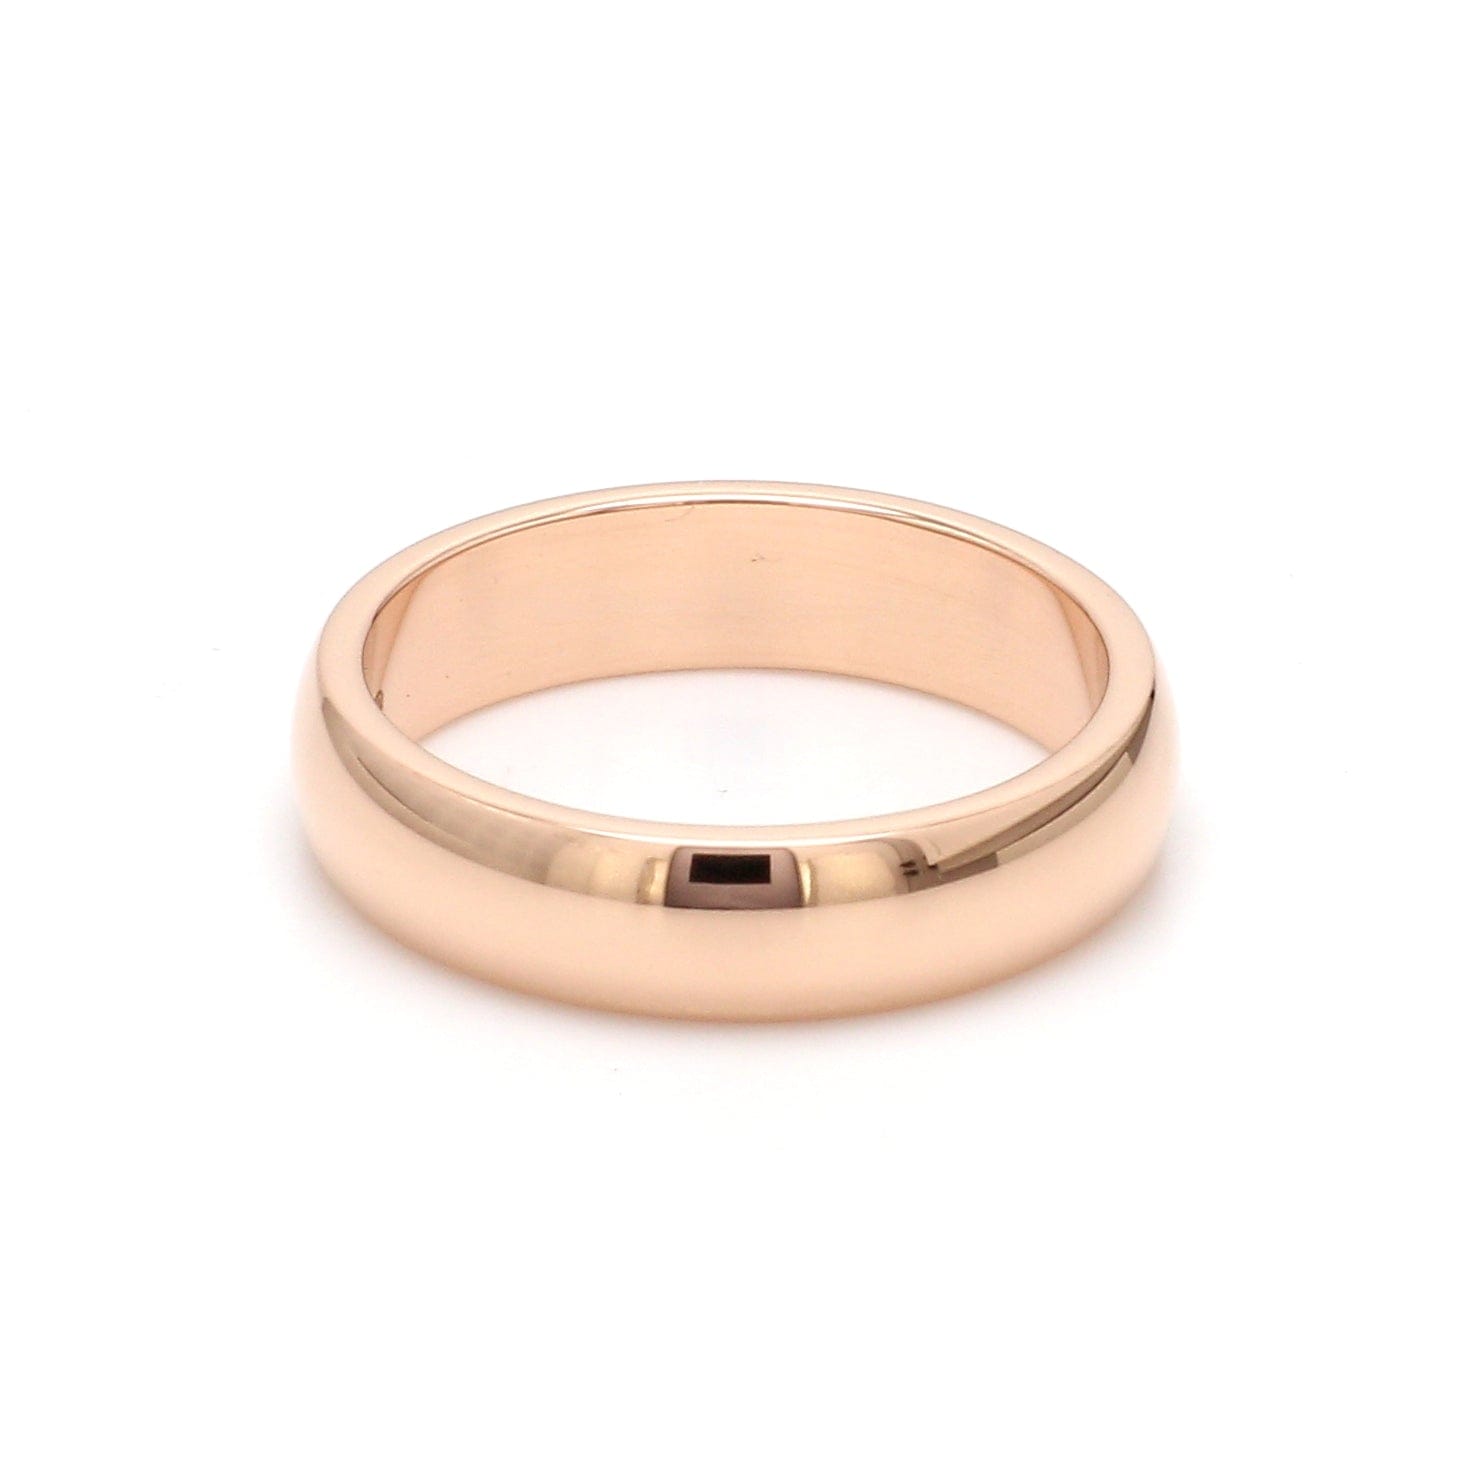 8mm Plain Polished Two-Tone Gold Wedding Band Ring